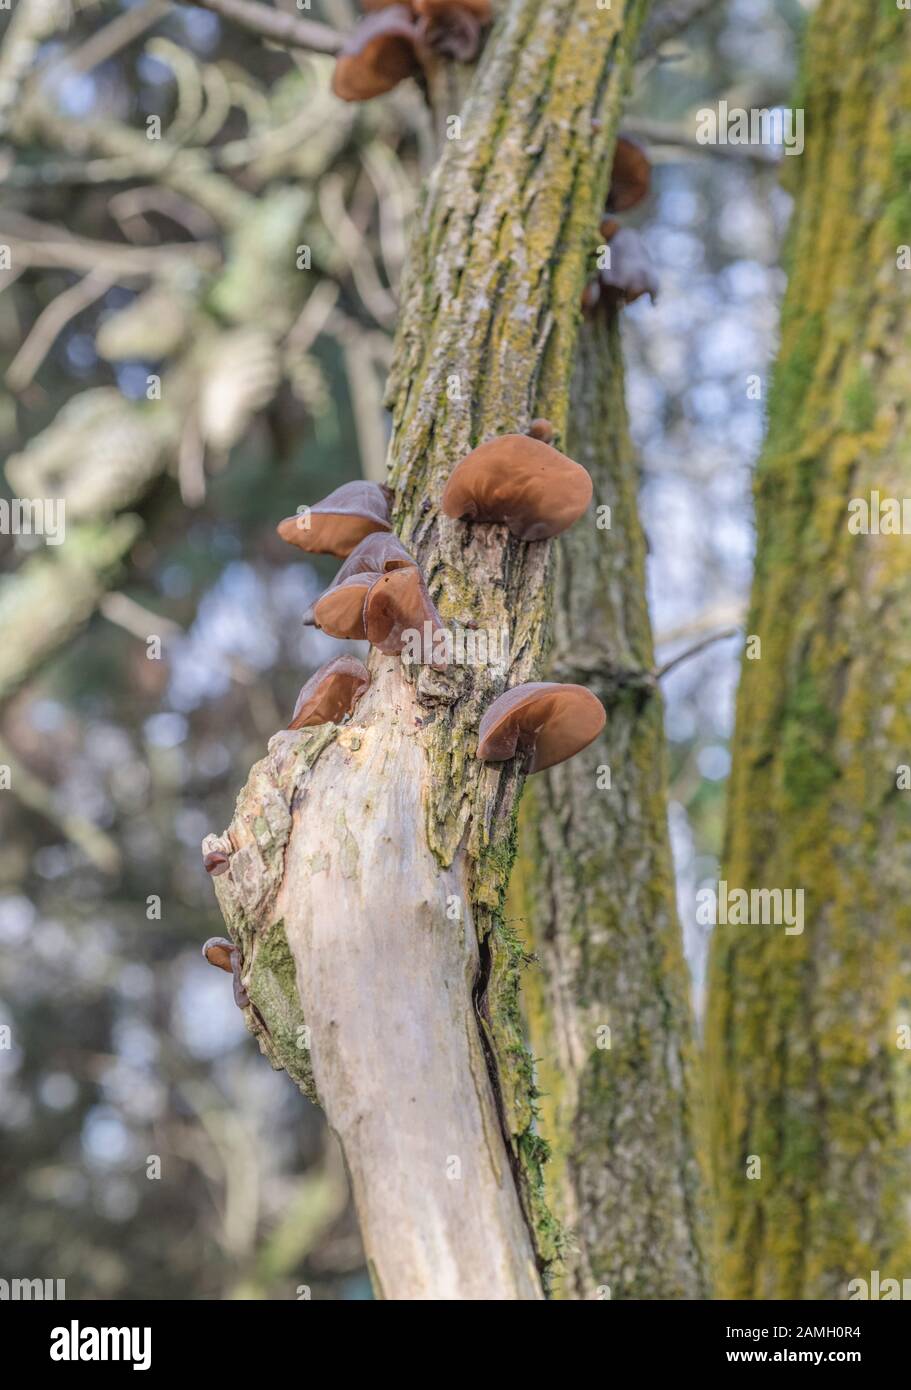 Wood Ears / Jew's Ear fungus - Auricularia auricula-judae - on Common Elder / Sambucus nigra. Foraging, foraged food, wood ear mushrooms. Stock Photo